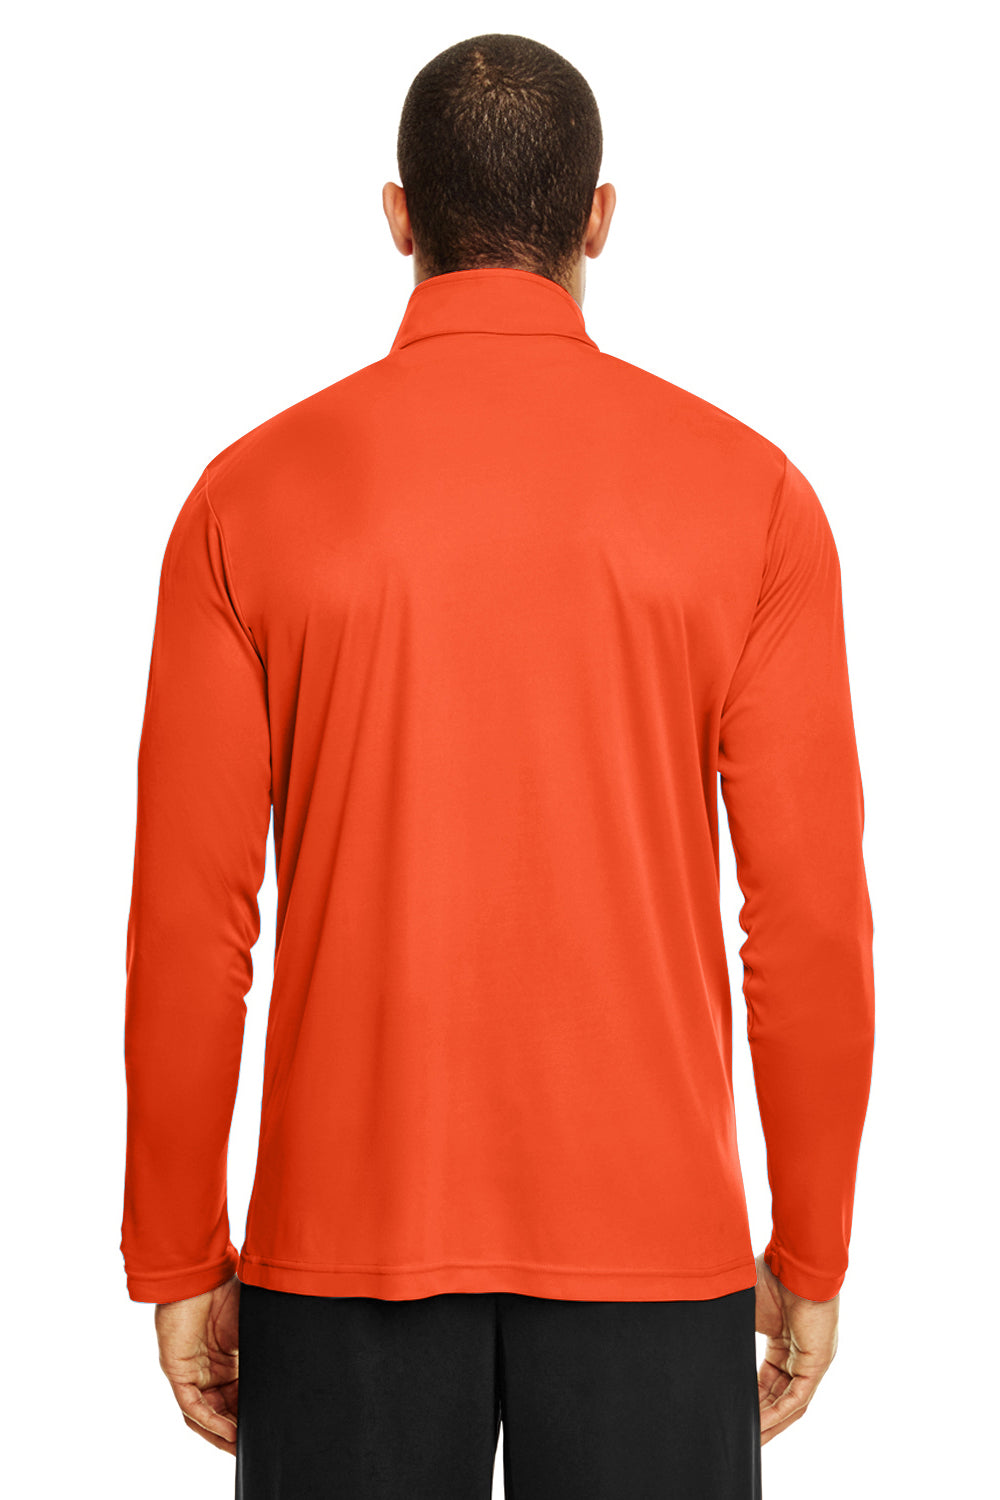 Team 365 TT31 Mens Zone Performance Moisture Wicking 1/4 Zip Sweatshirt Orange Back